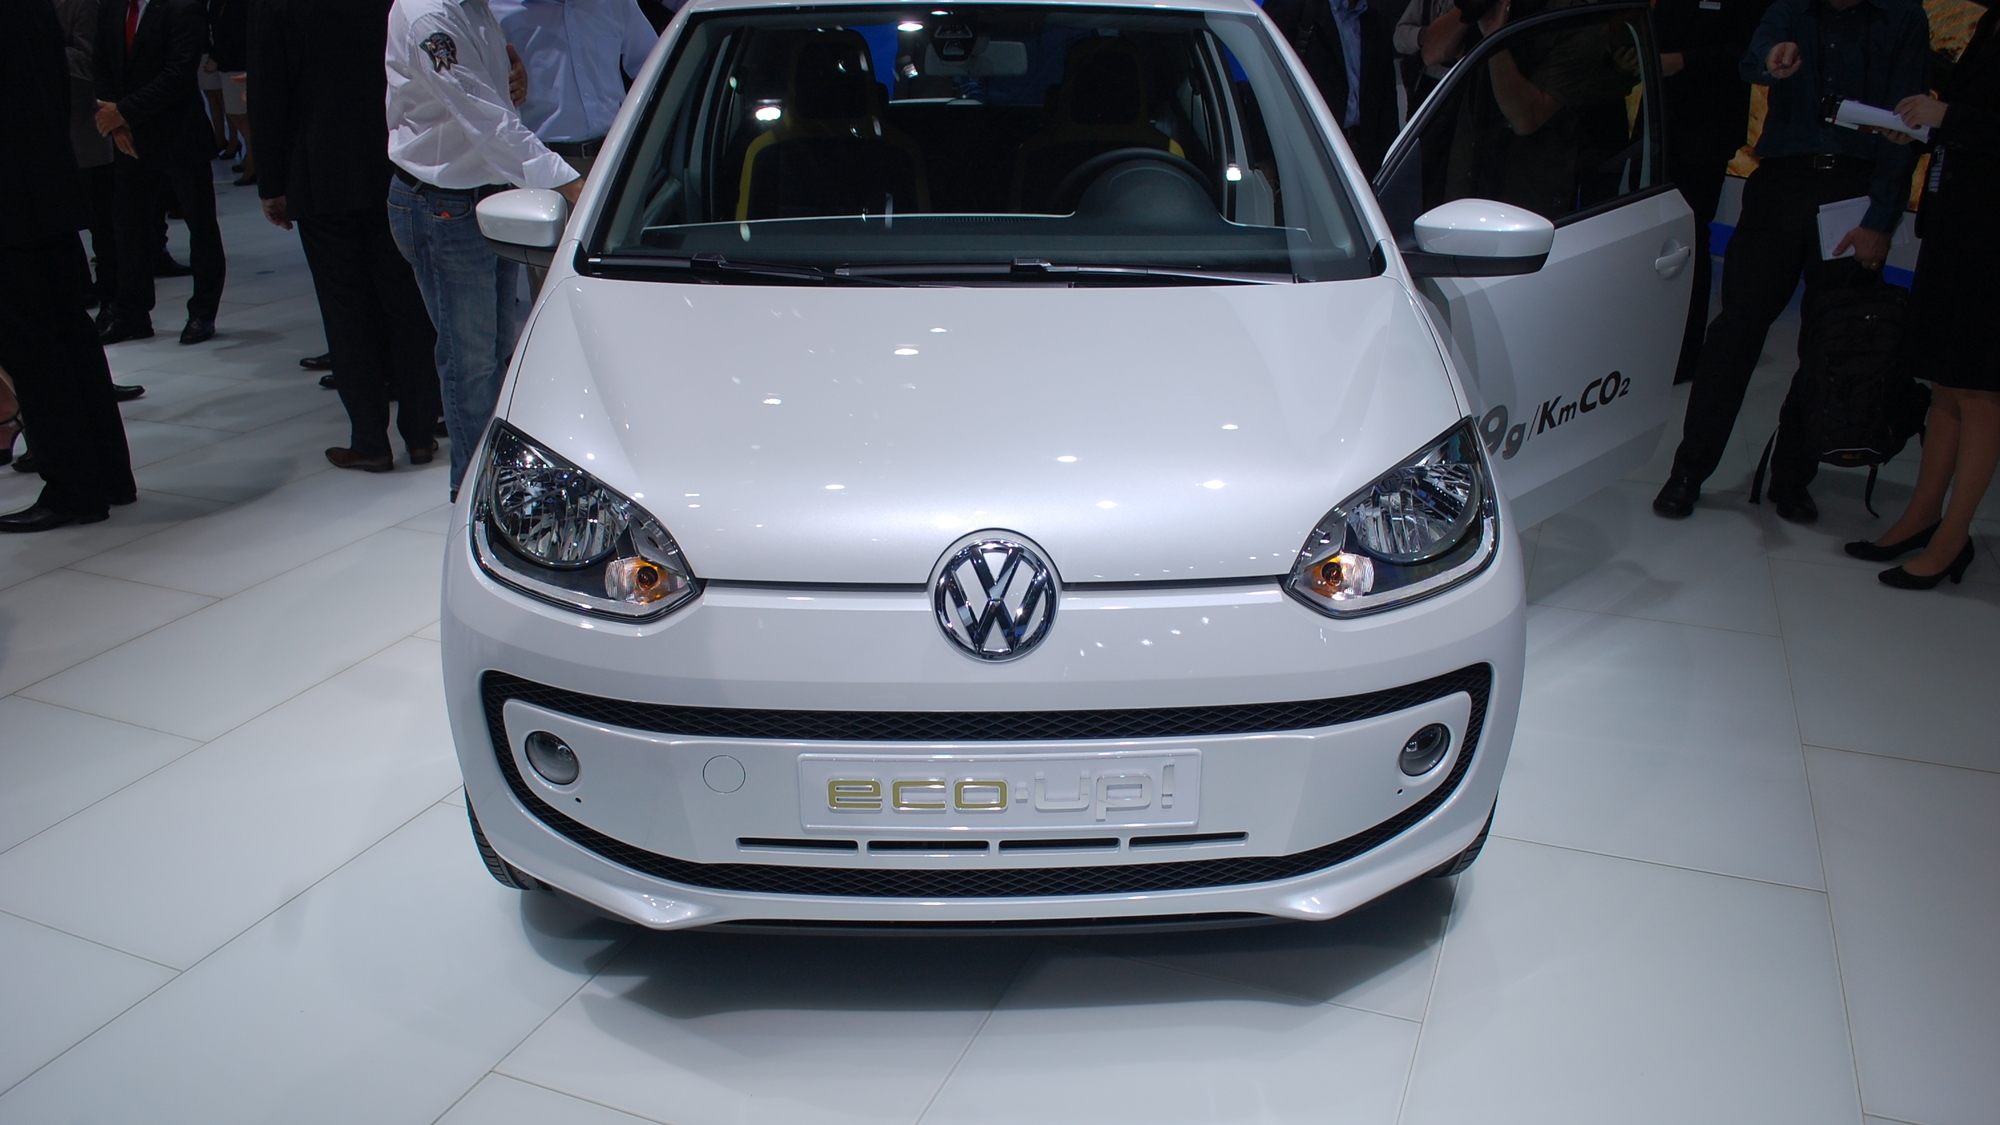 Volkswagen eco-up! live photos, 2011 Frankfurt Auto Show